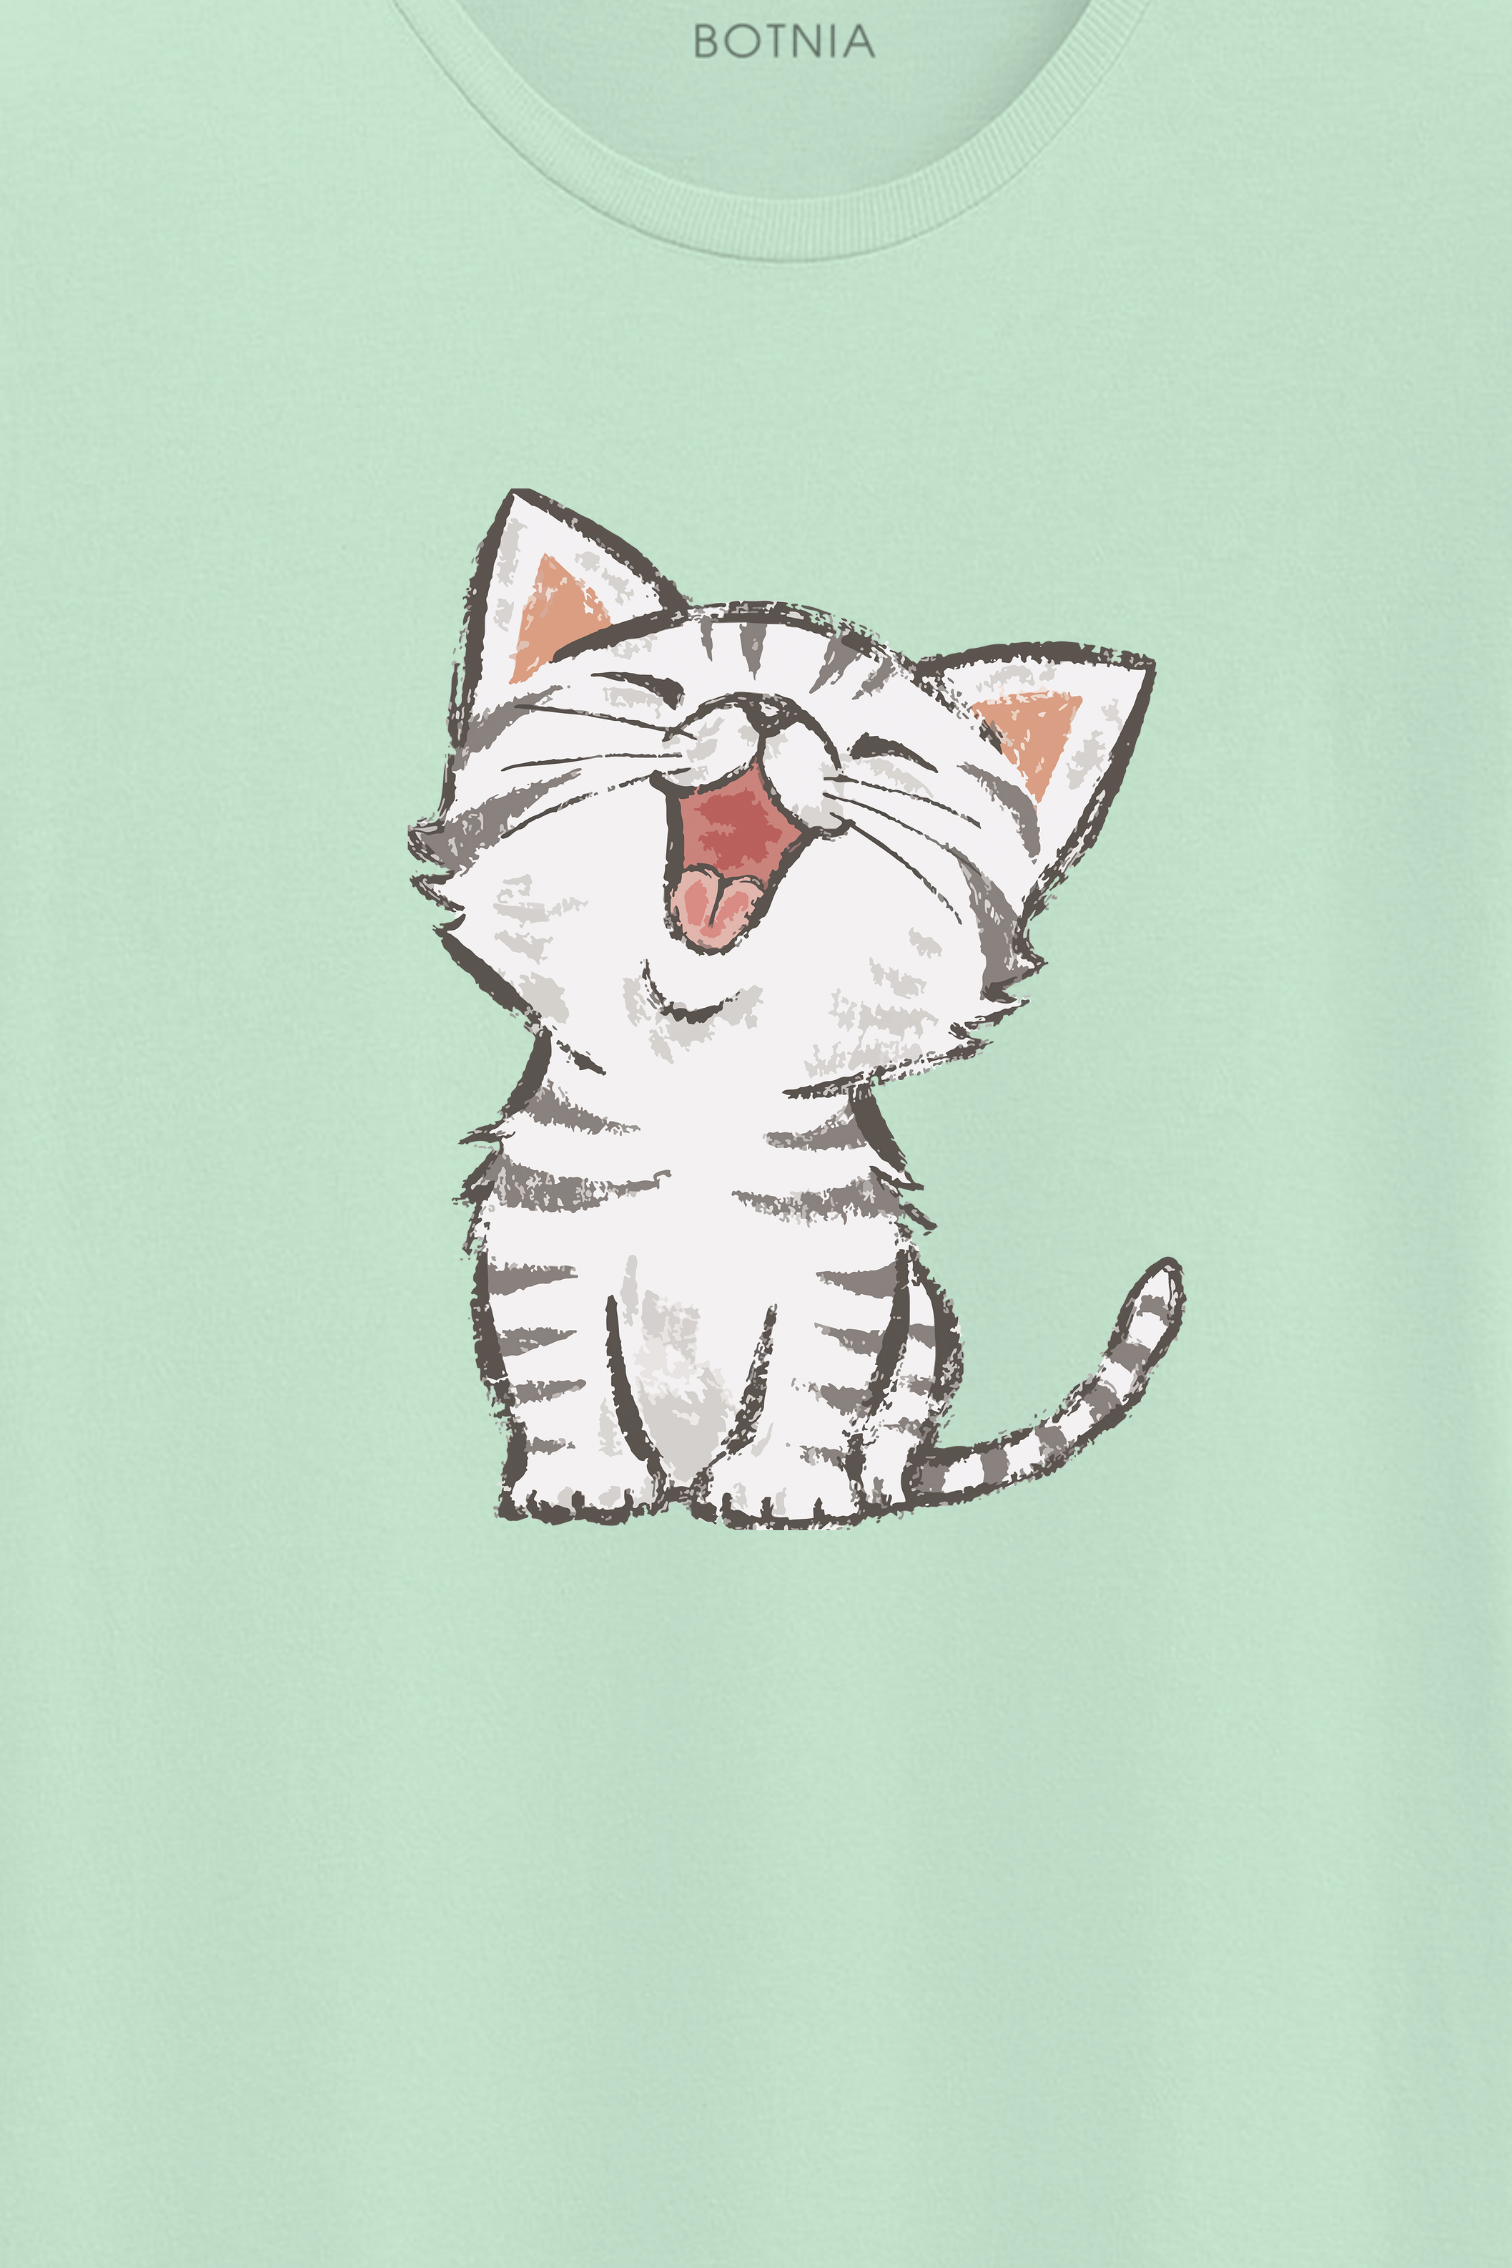 Meow- Half sleeve t-shirt